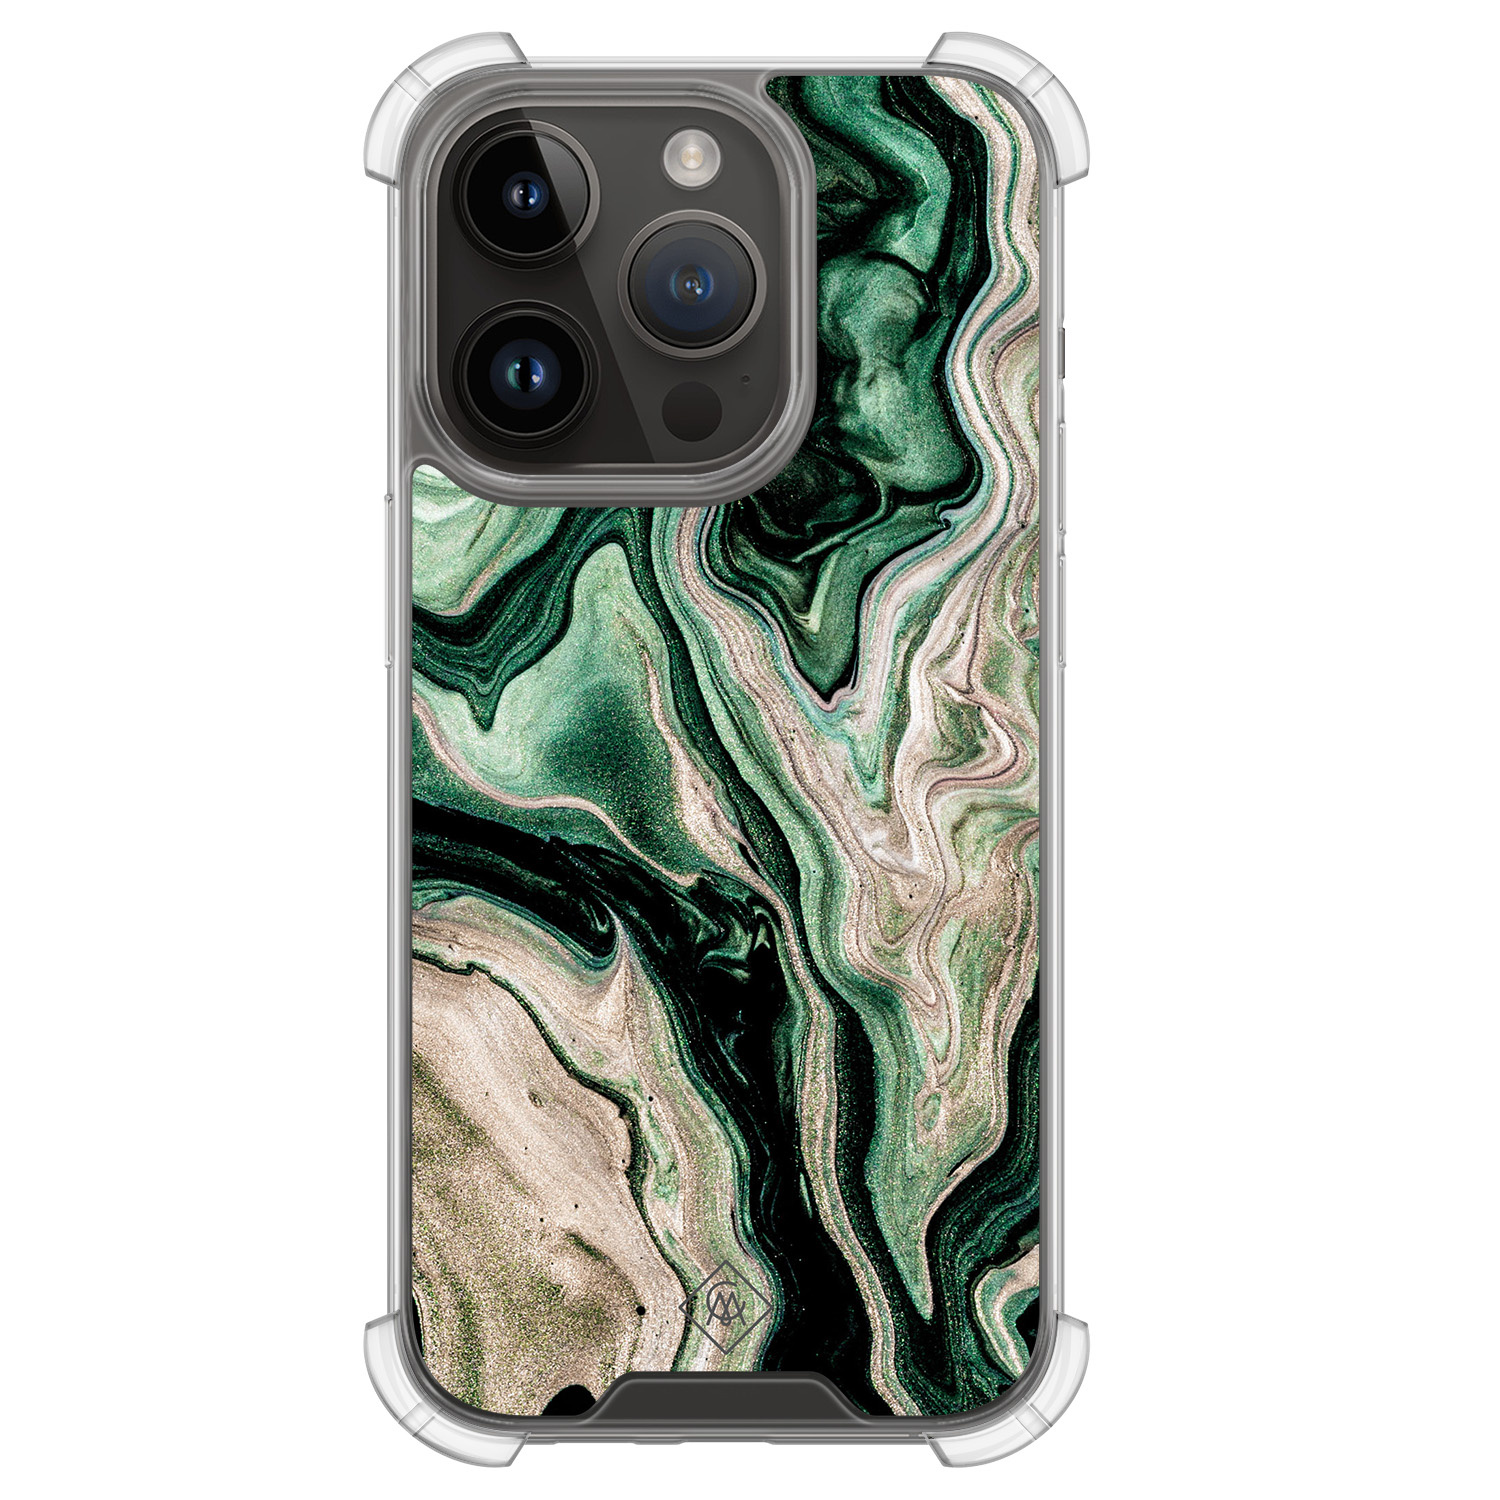 iPhone 13 Pro hoesje - Groen marmer / Marble - Casimoda® Shockproof case - Extra sterk - TPU/polycarbonaat - Groen, Transparant